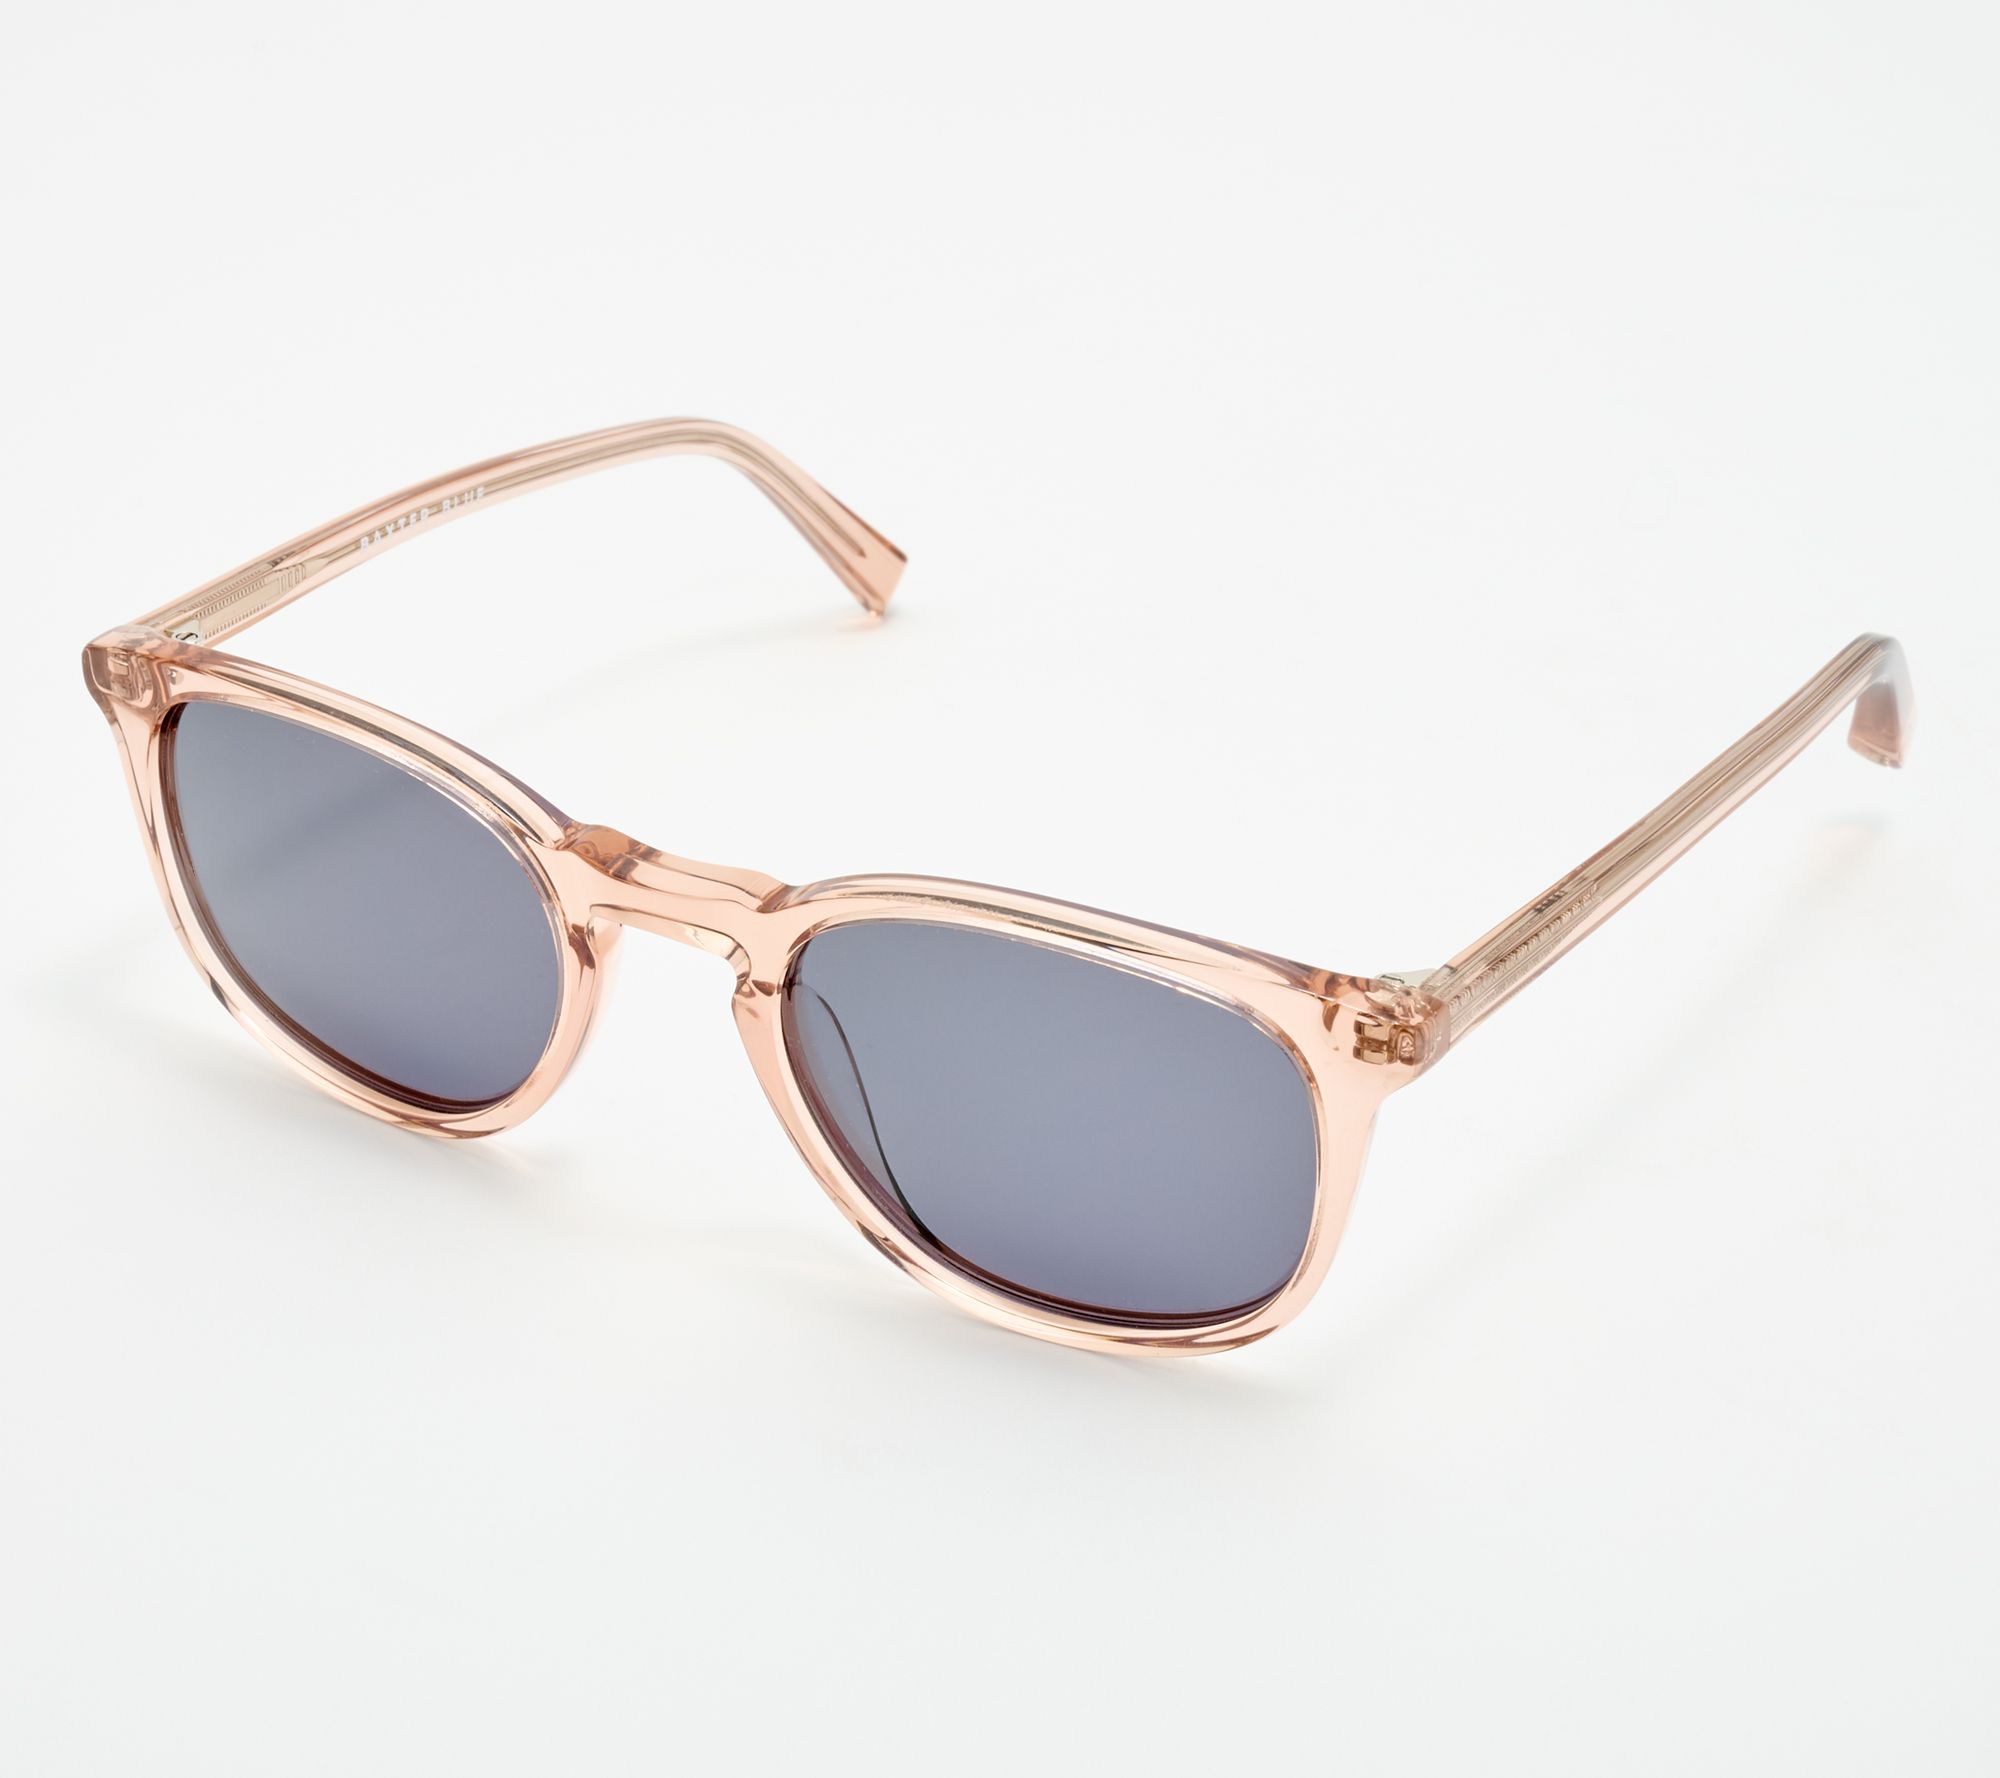 Caelum Women's Fashion Square Flat Top Sunglasses